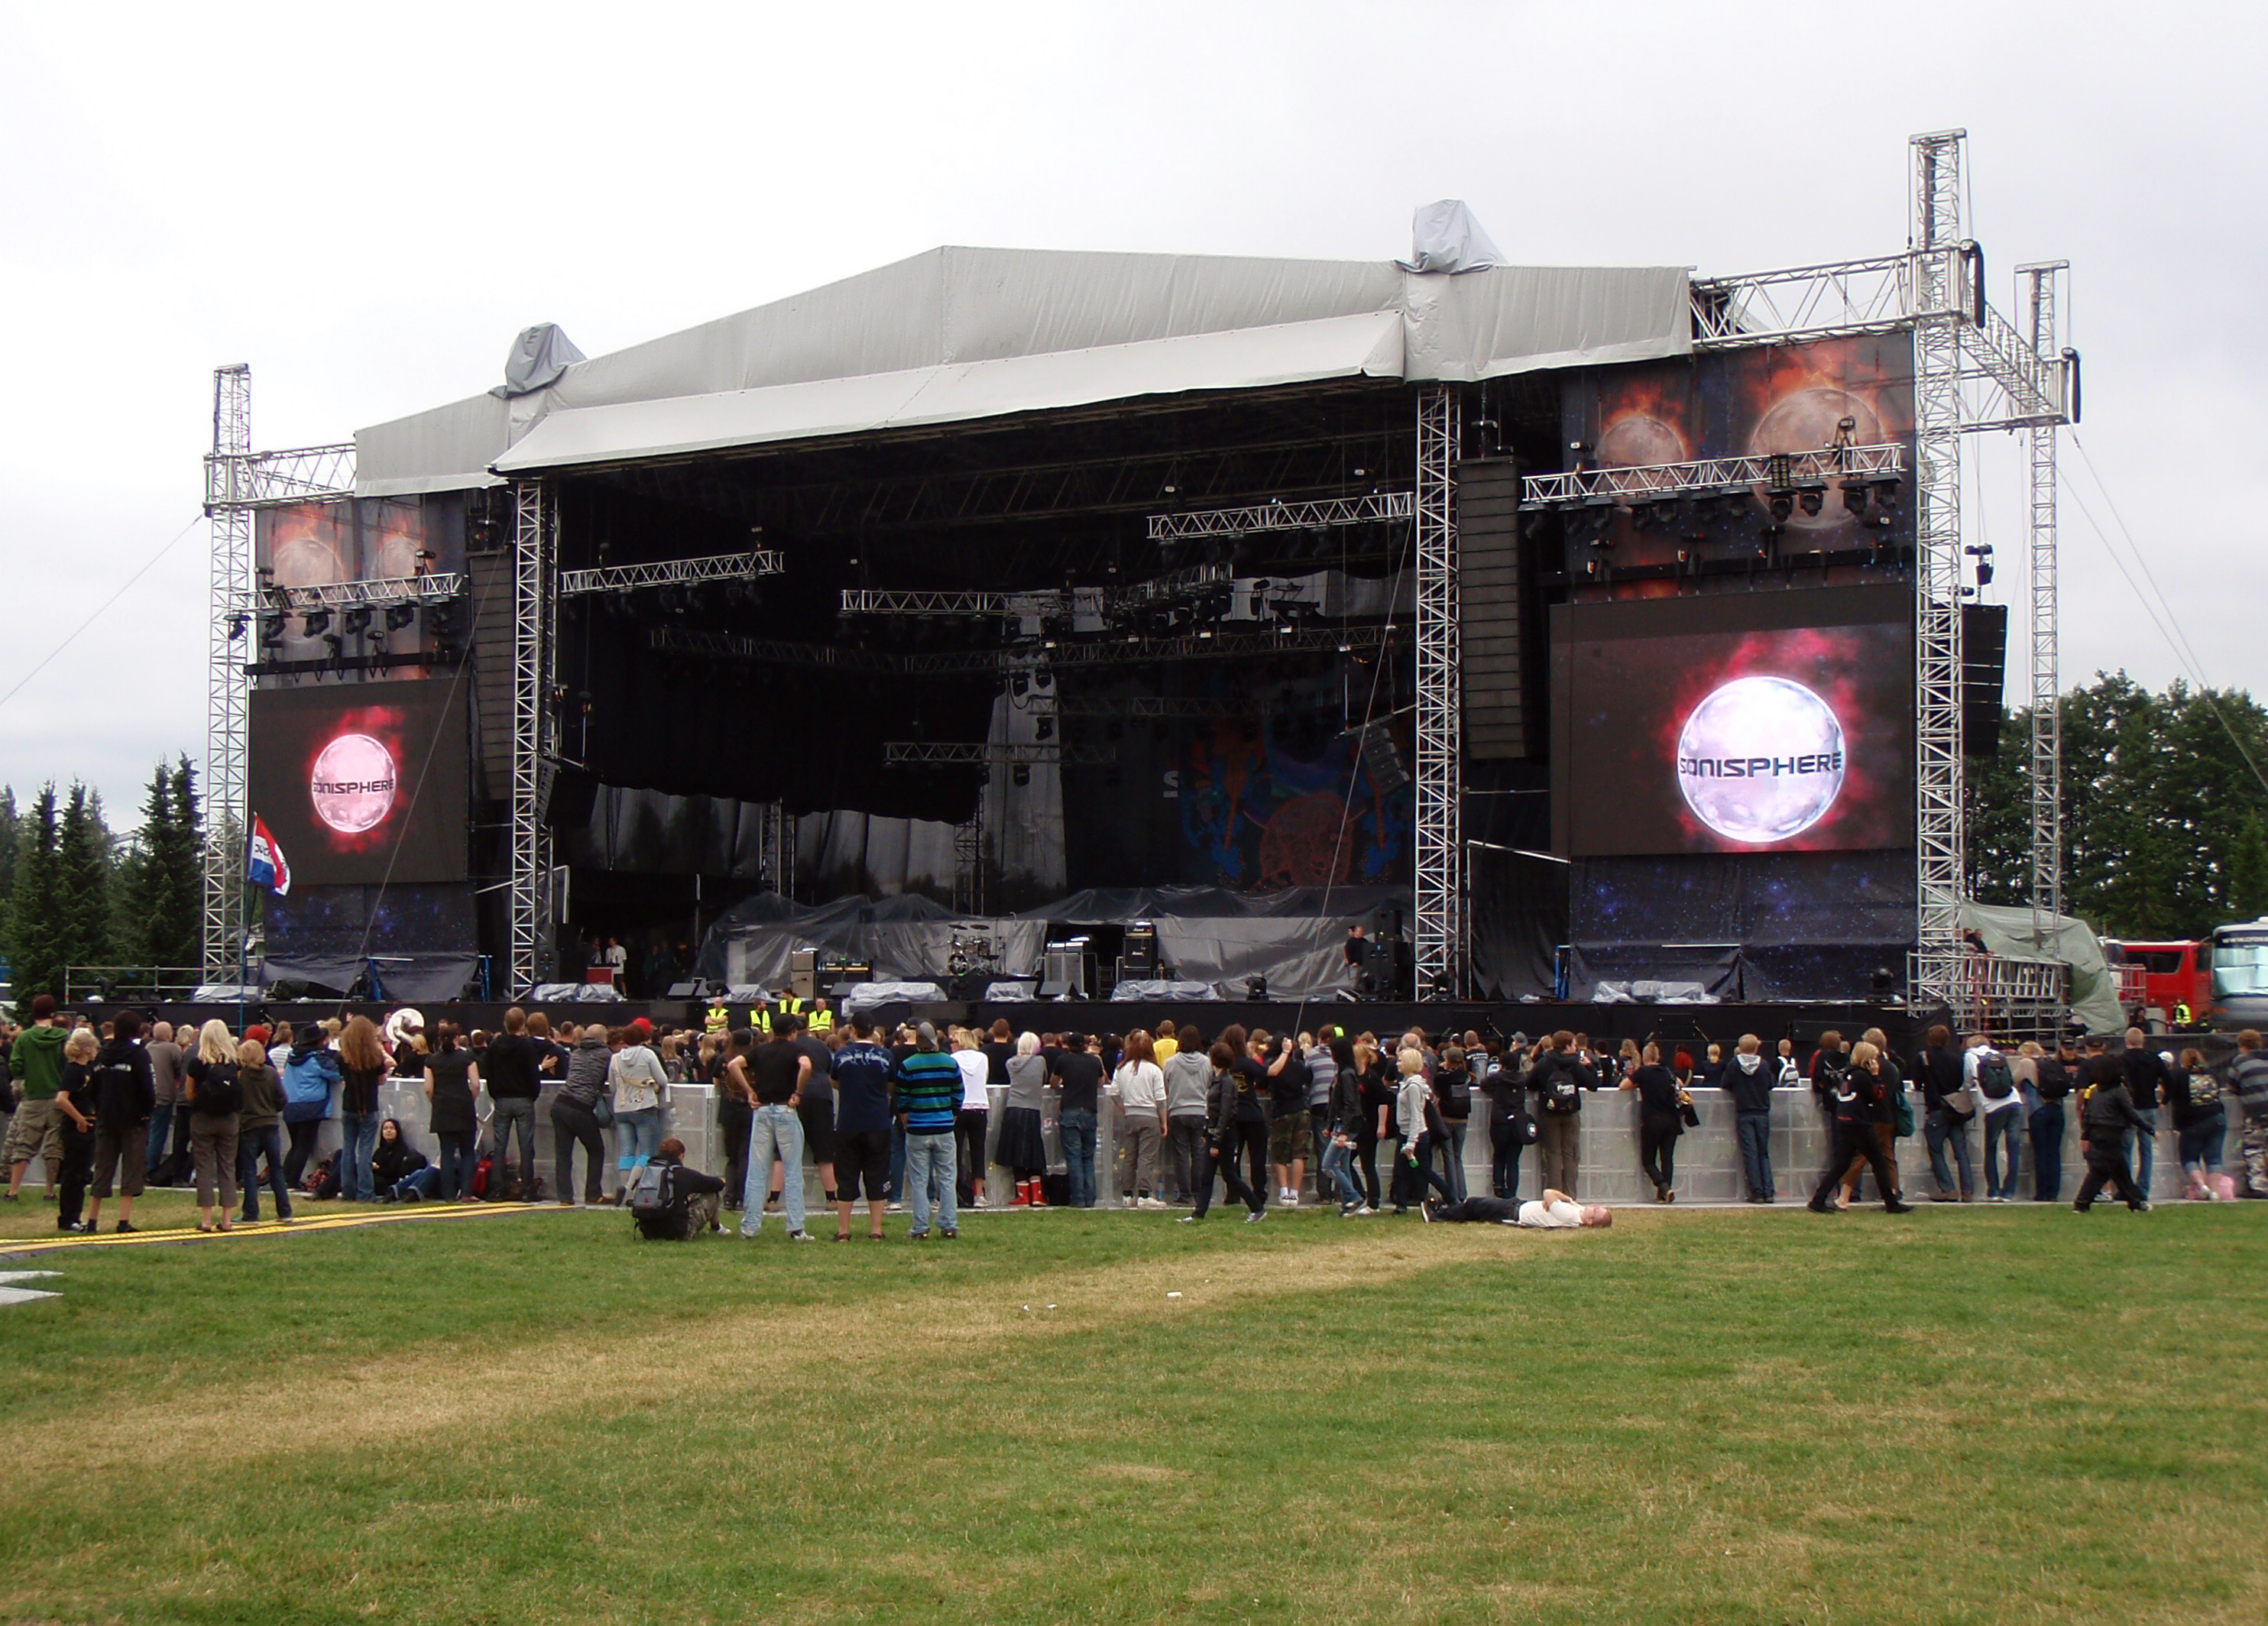 Sonisphere Festival - Wikipedia